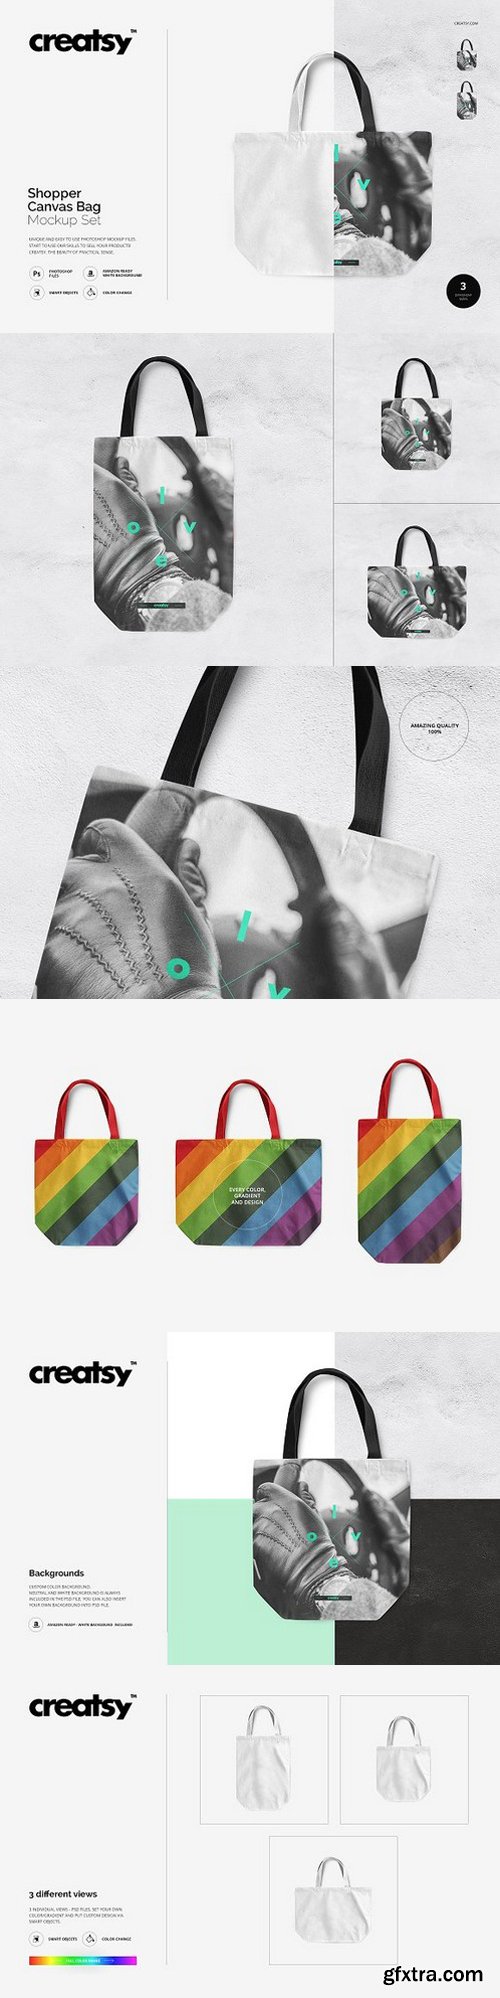 CM - Shopper Canvas Bag Mockup Set 1423210